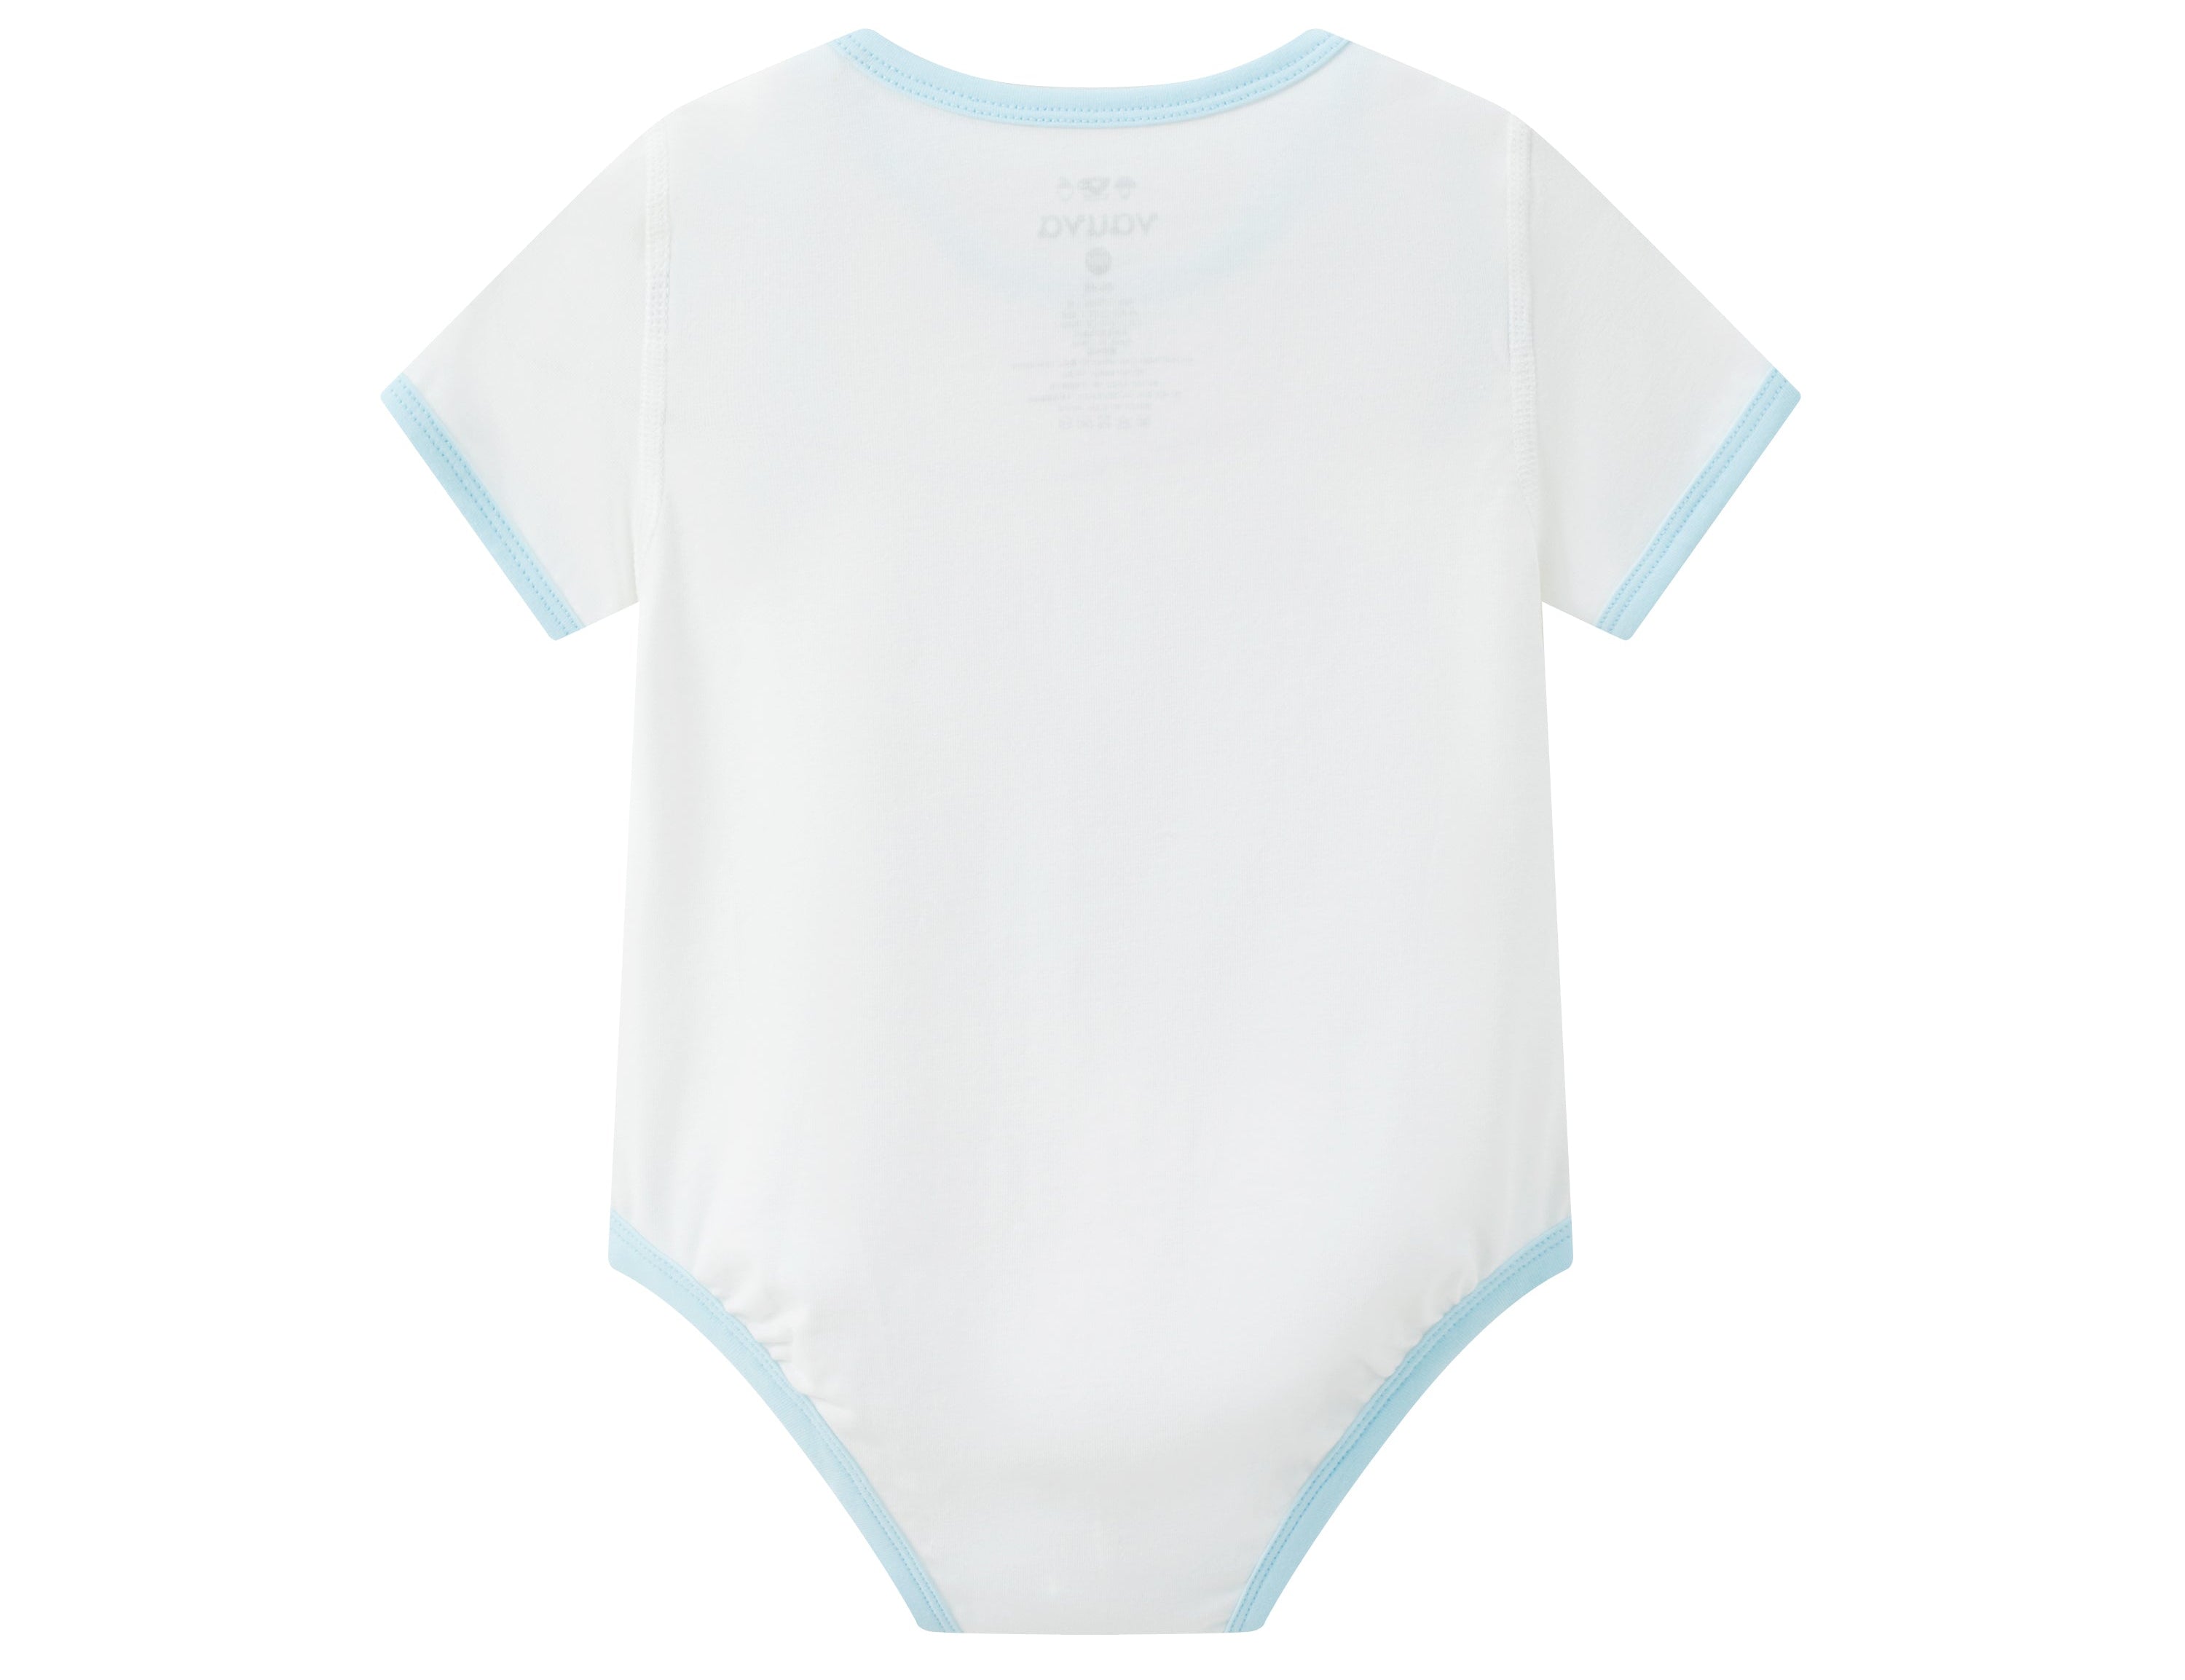 Vauva SS24 - Baby Boy Sweet Dream Short Sleeves Bodysuit - Product 2